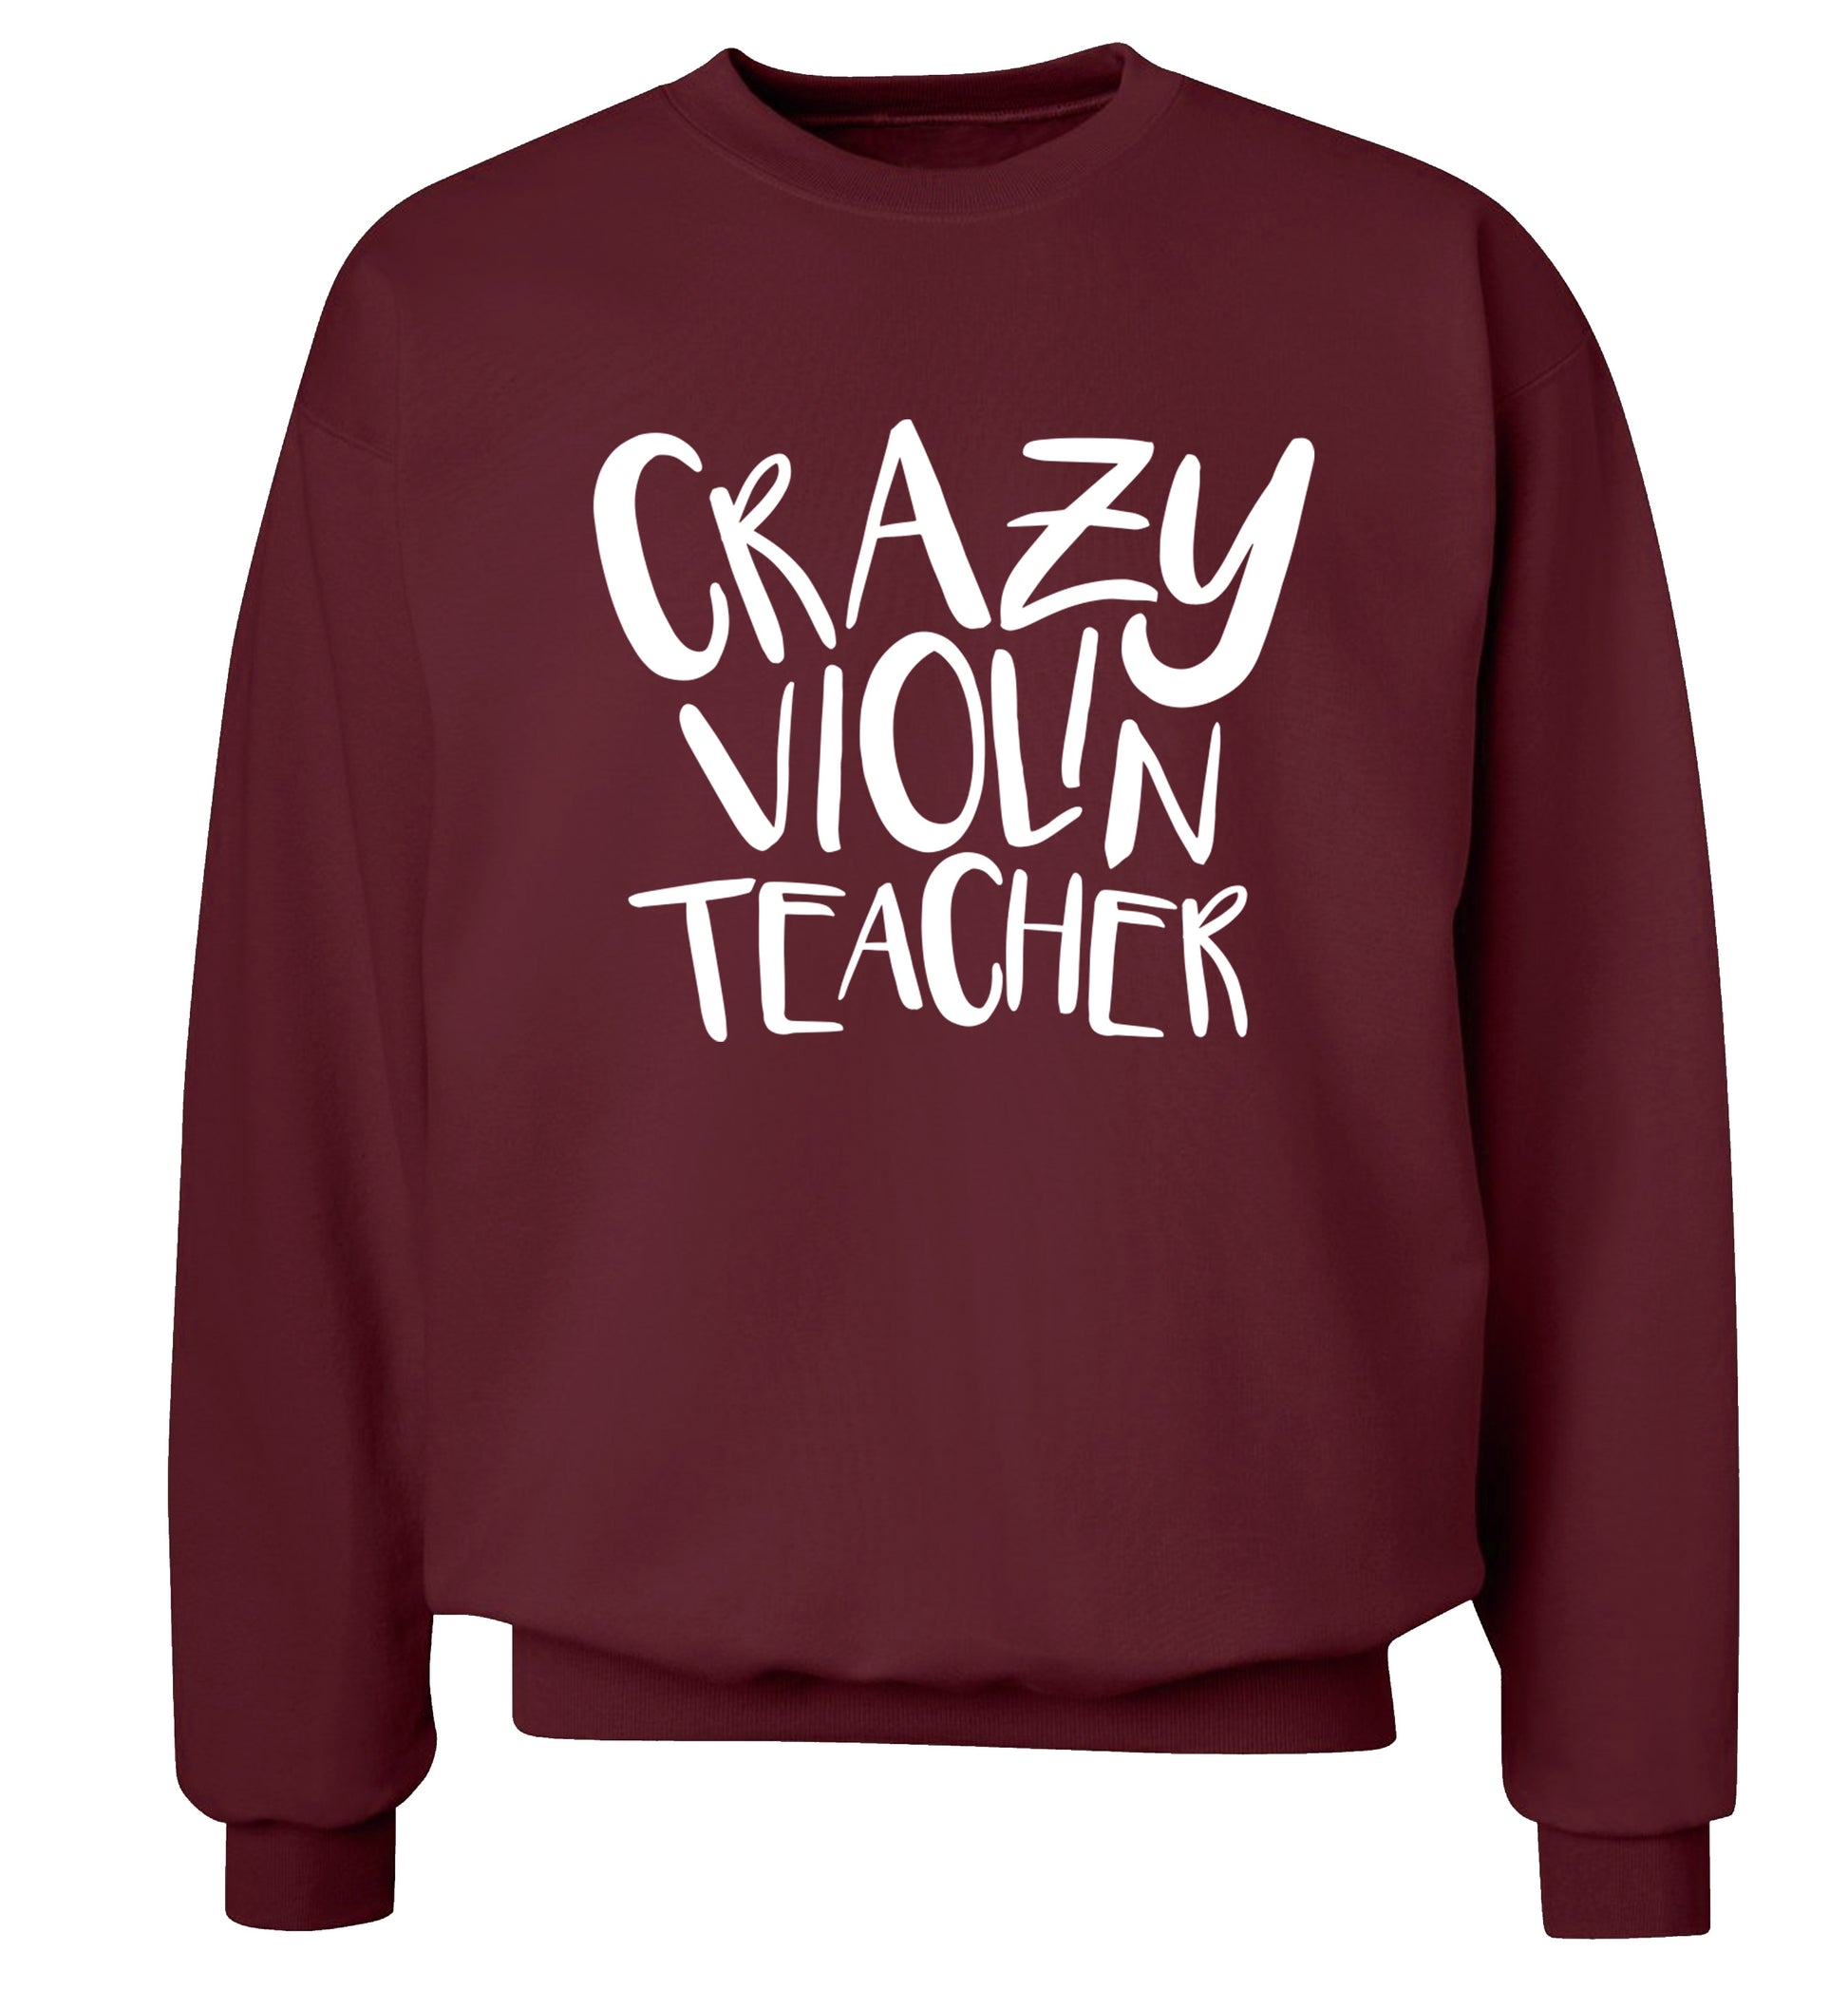 Crazy violin teacher Adult's unisex maroon Sweater 2XL